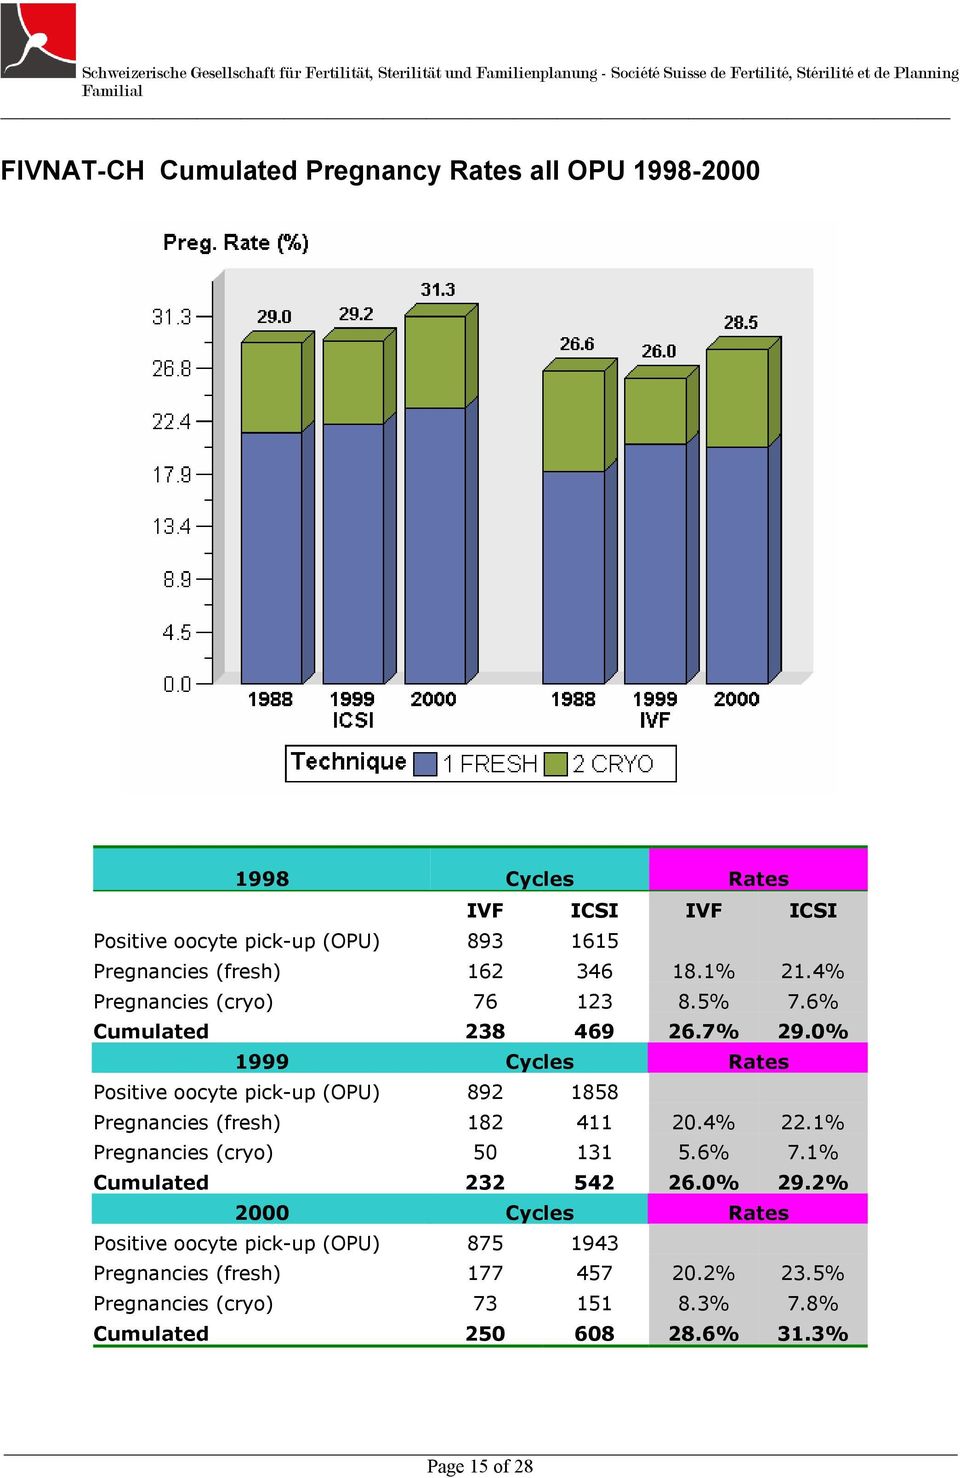 6% Cumulated 238 469 26.7% 29.0% 1999 Cycles Rates Positive oocyte pick-up (OPU) 892 1858 Pregnancies (fresh) 182 411 20.4% 22.1% Pregnancies (cryo) 50 131 5.6% 7.